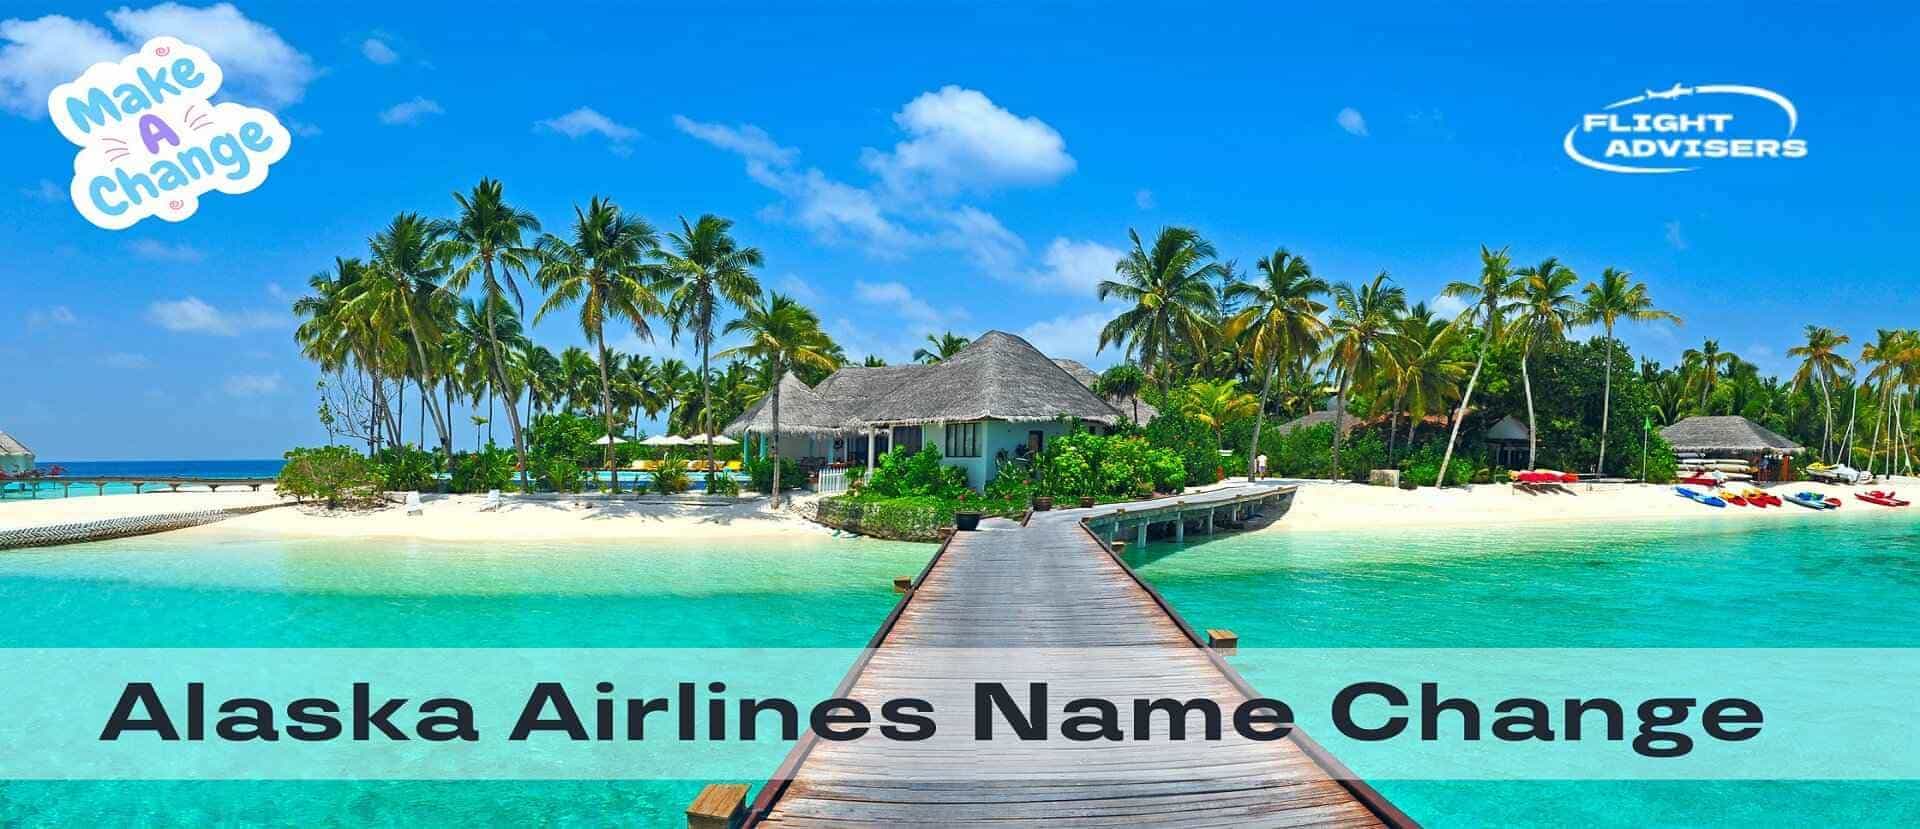 alaska airlines name change on ticket.jpg